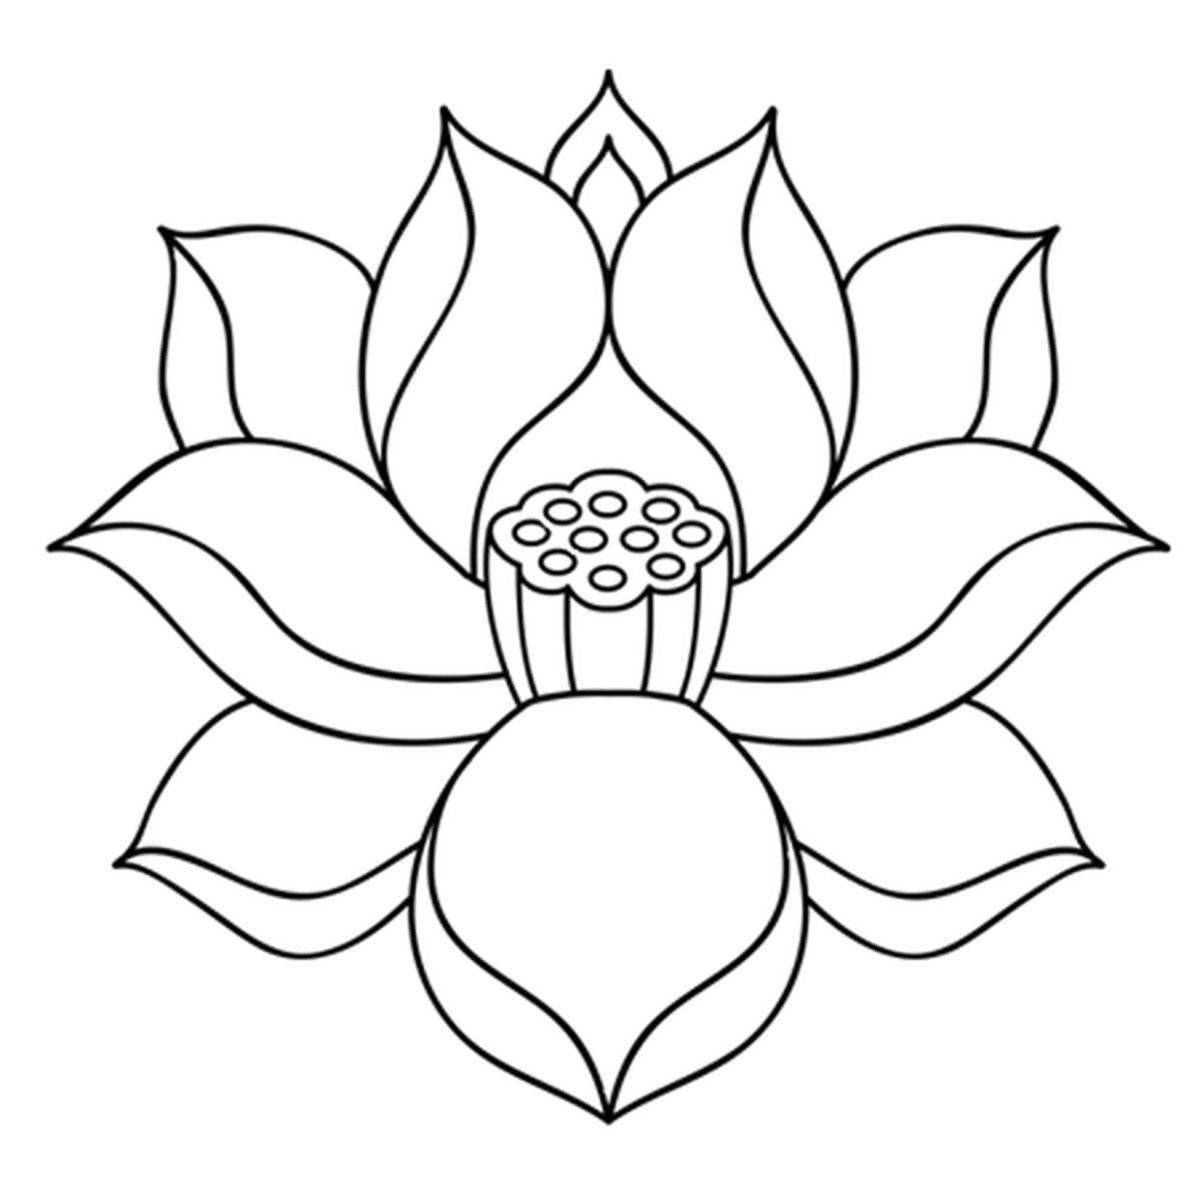 Fun coloring lotus